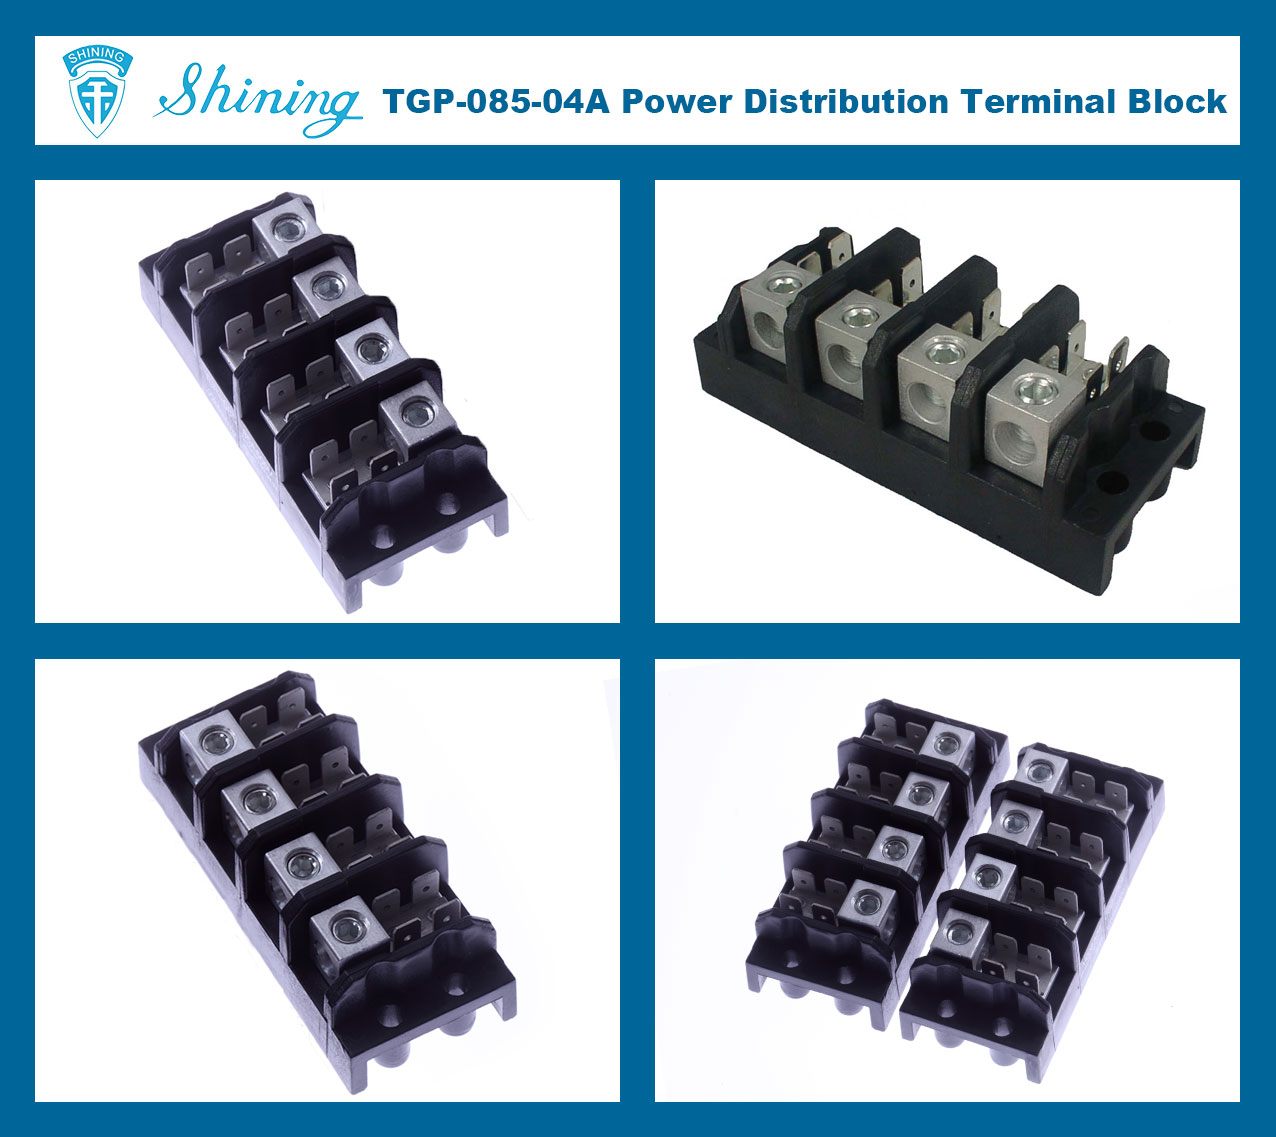 SHINING-TGP-085-04A 600V 85A 4 Pole Electrical Power Terminal Block